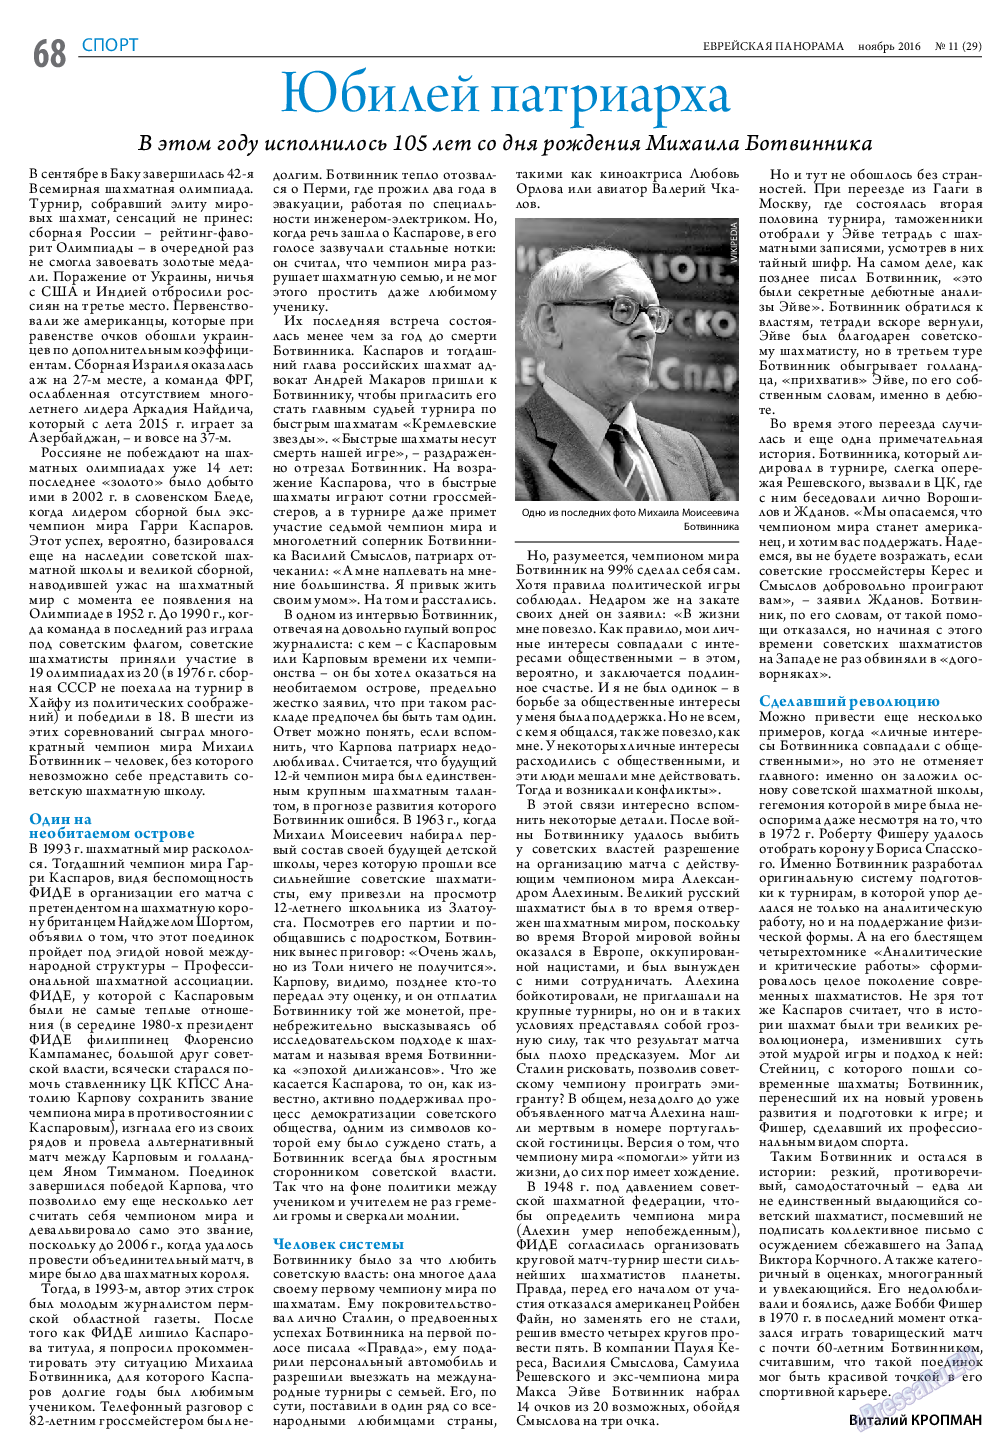 Еврейская панорама, газета. 2016 №11 стр.68